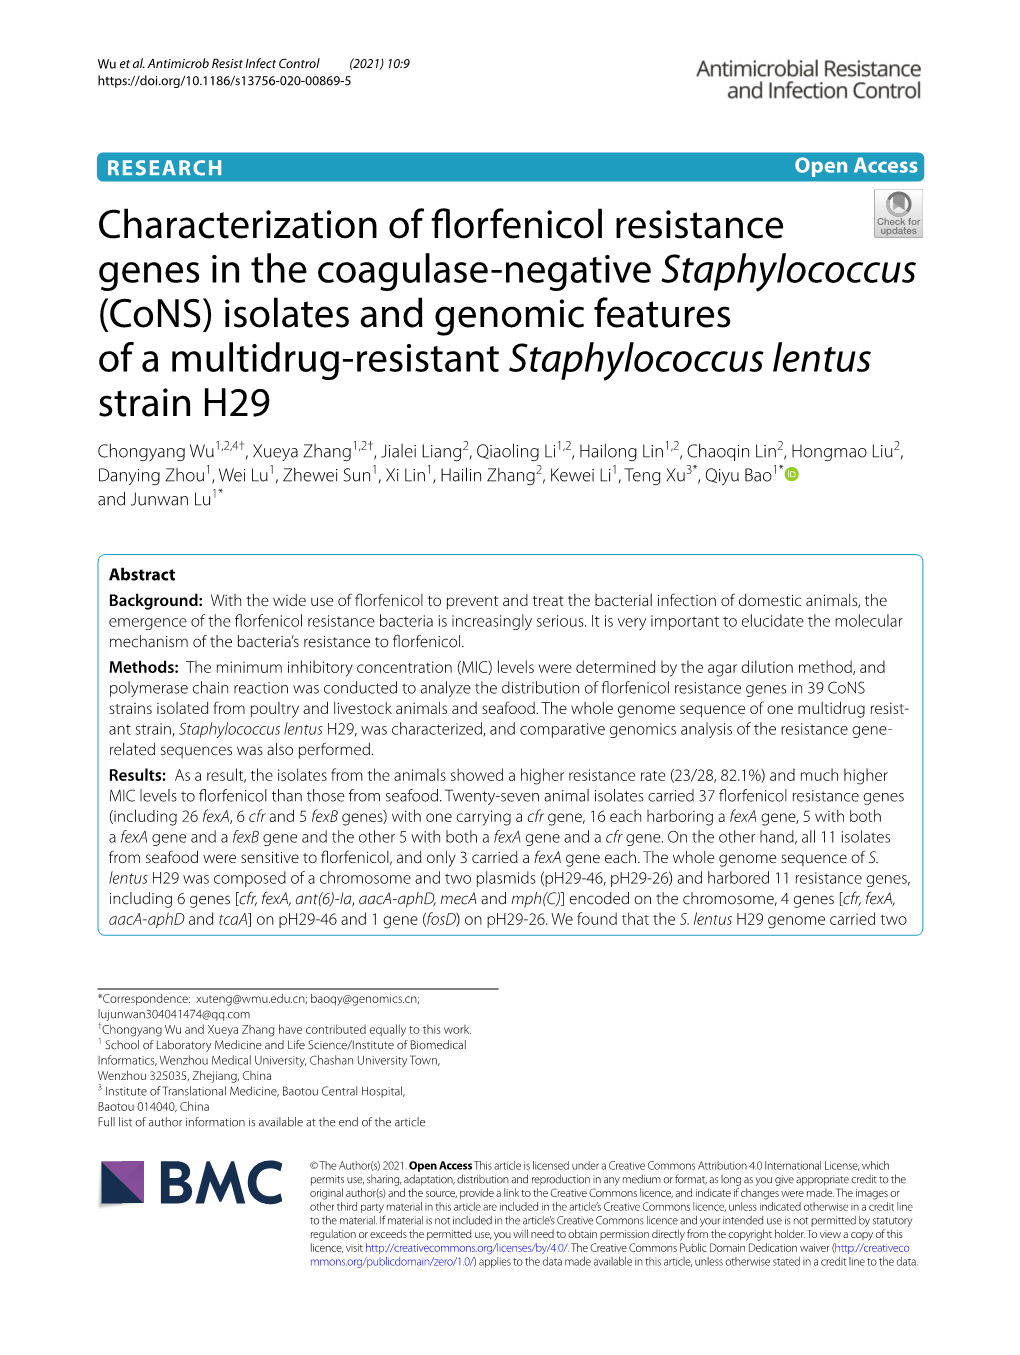 Characterization of Florfenicol Resistance Genes in the Coagulase